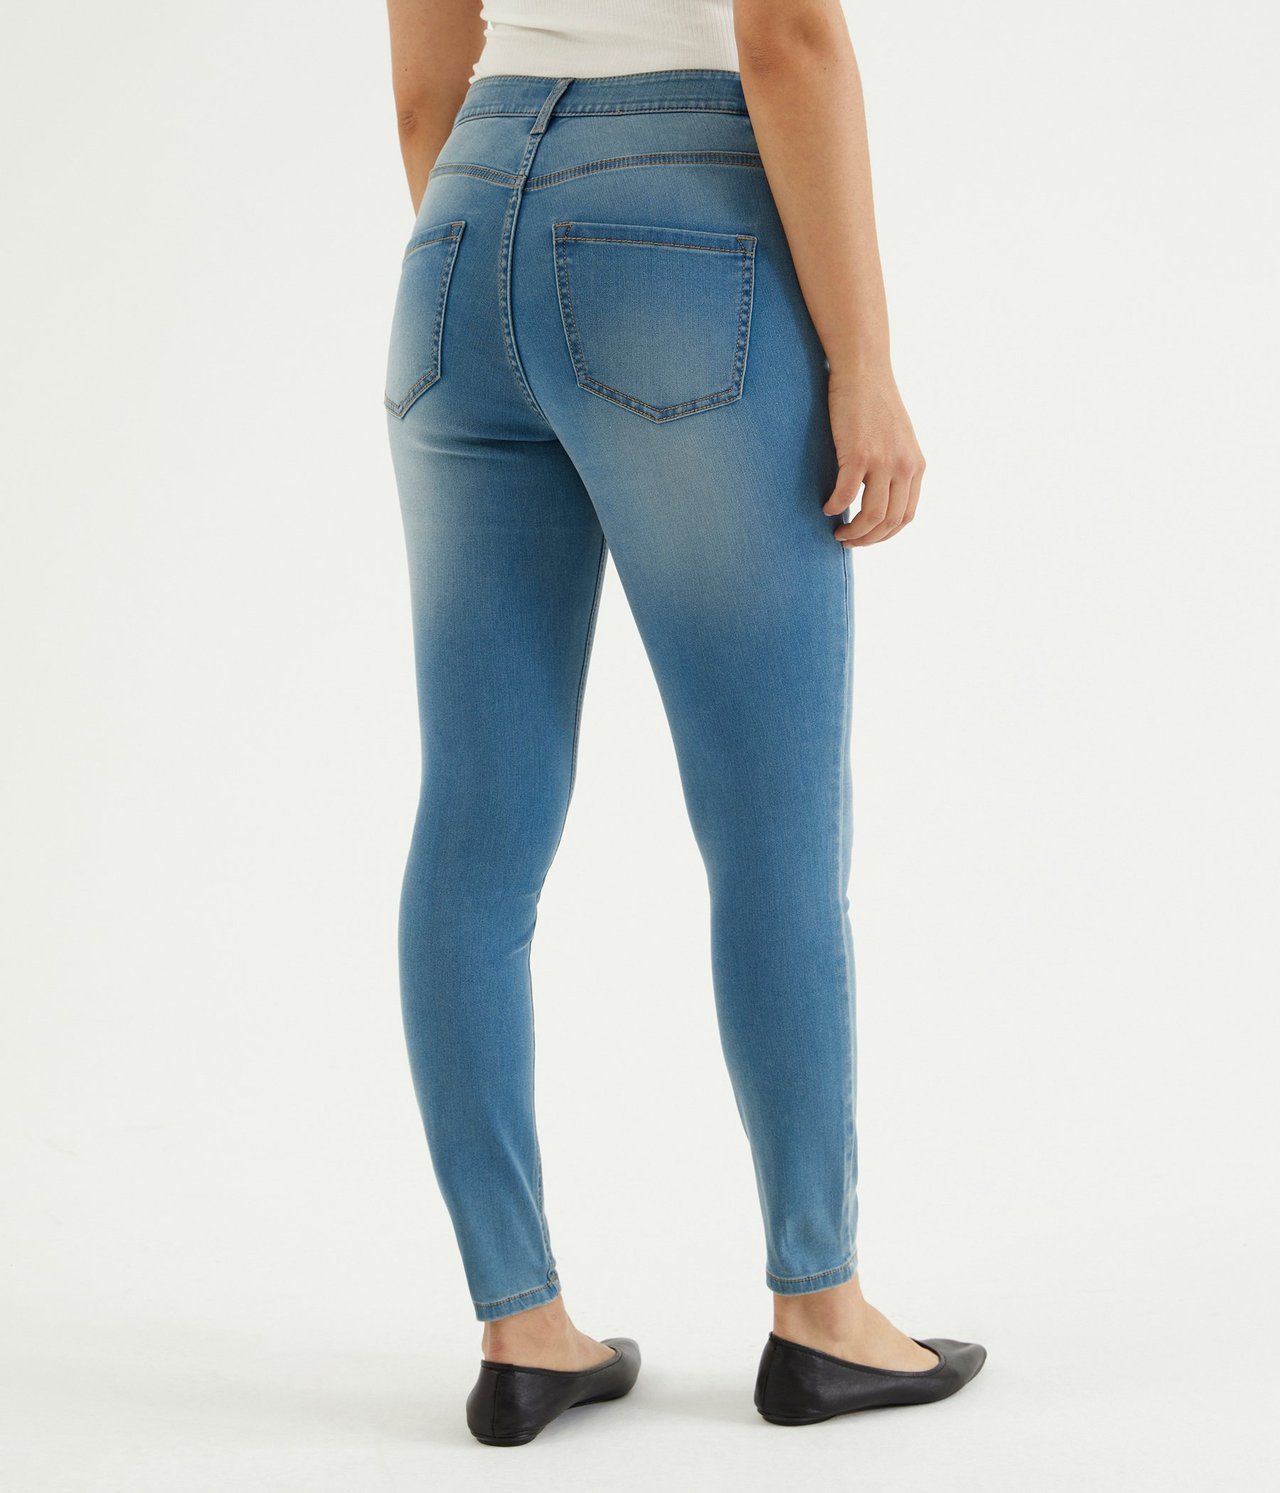 Super slim jeans short leg - Denim - 8